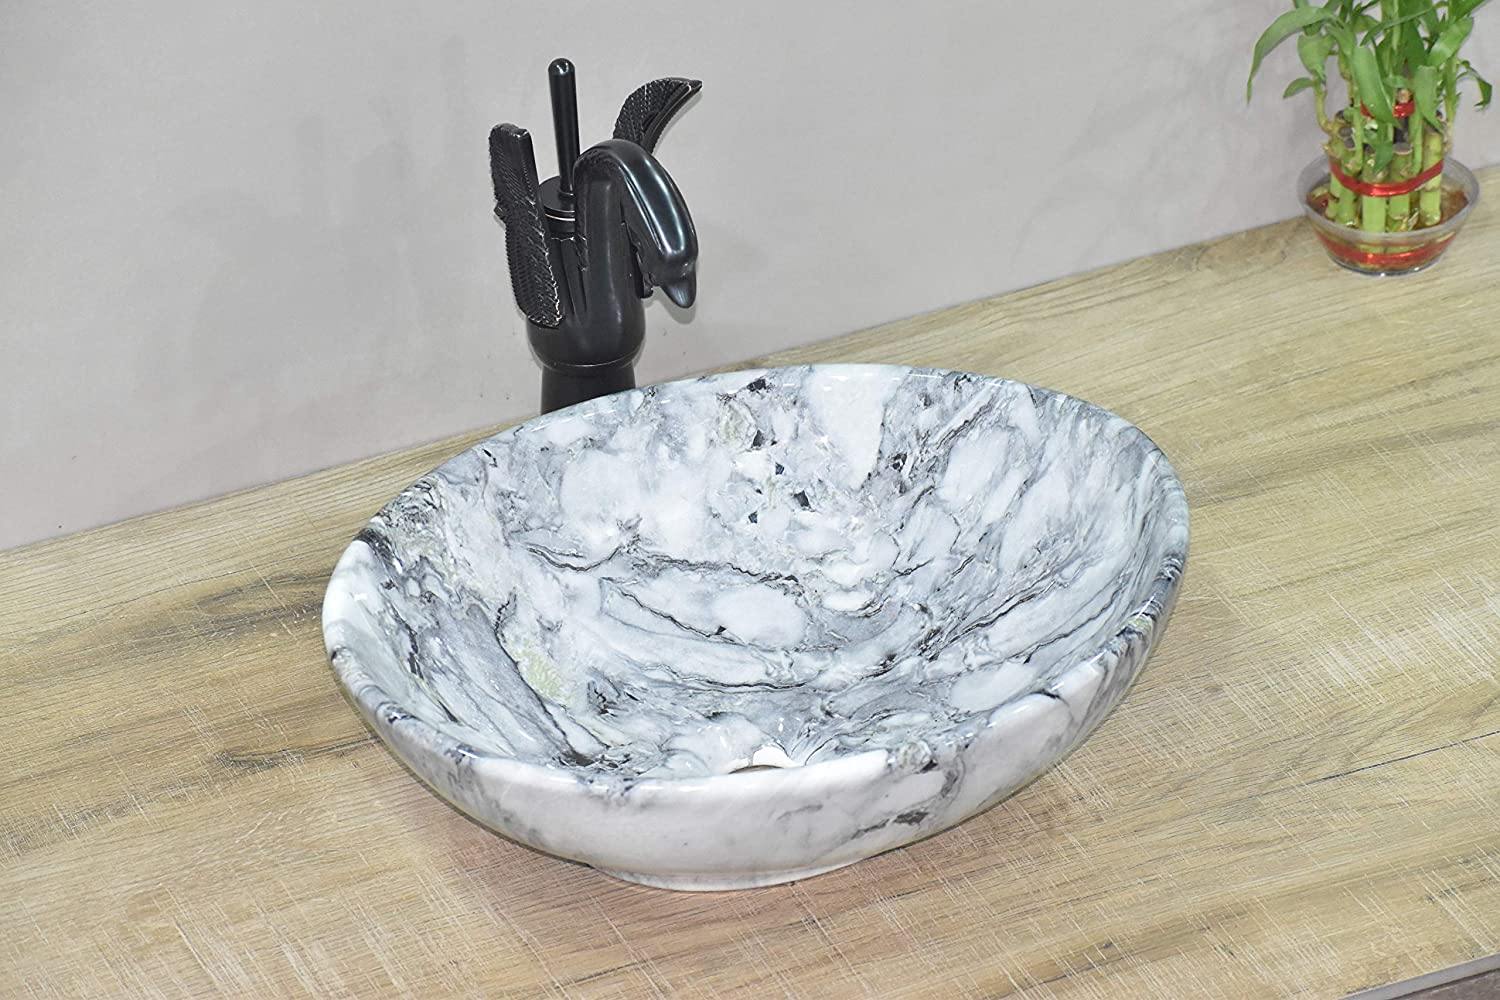 Ceramic Premium Designer Table Top/Over Counter/Vessel Sink Wash Basin for Bathroom 16 x 13.5 x 6 Inch Oval Shape in Light Blue Color Marble Pattern - Bath Outlet